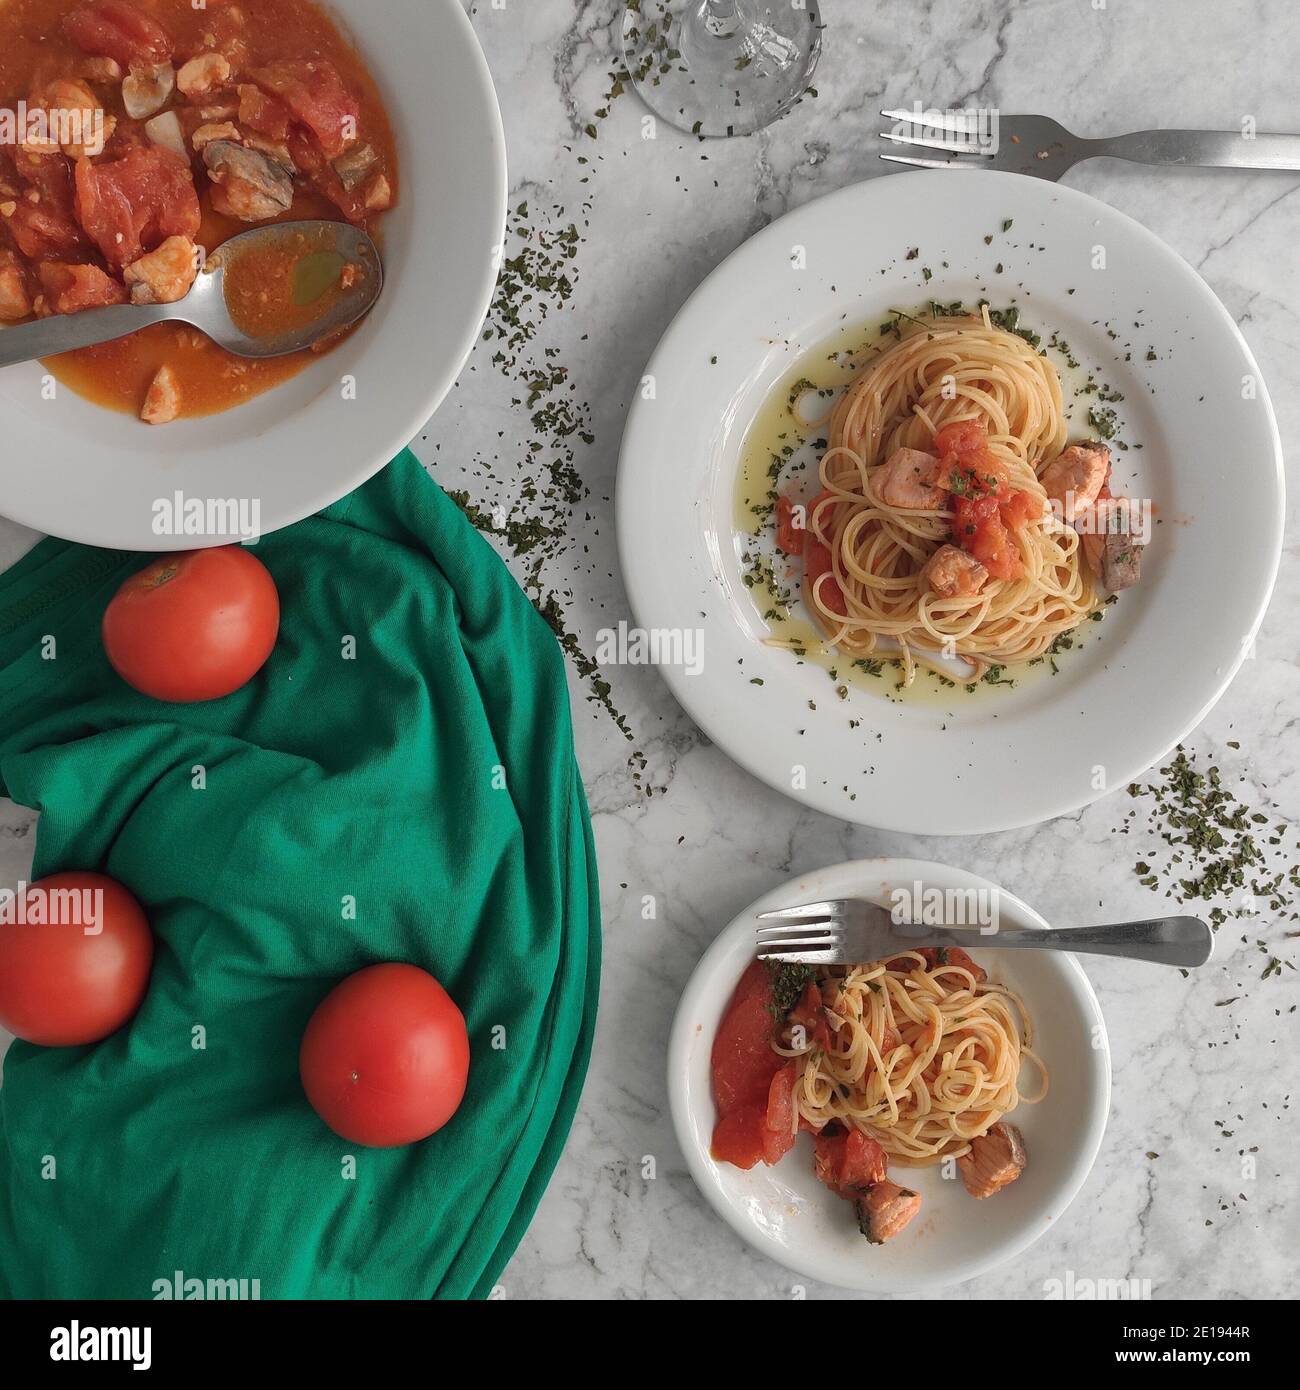 Salmon and red tomatoes spaghetti Stock Photo